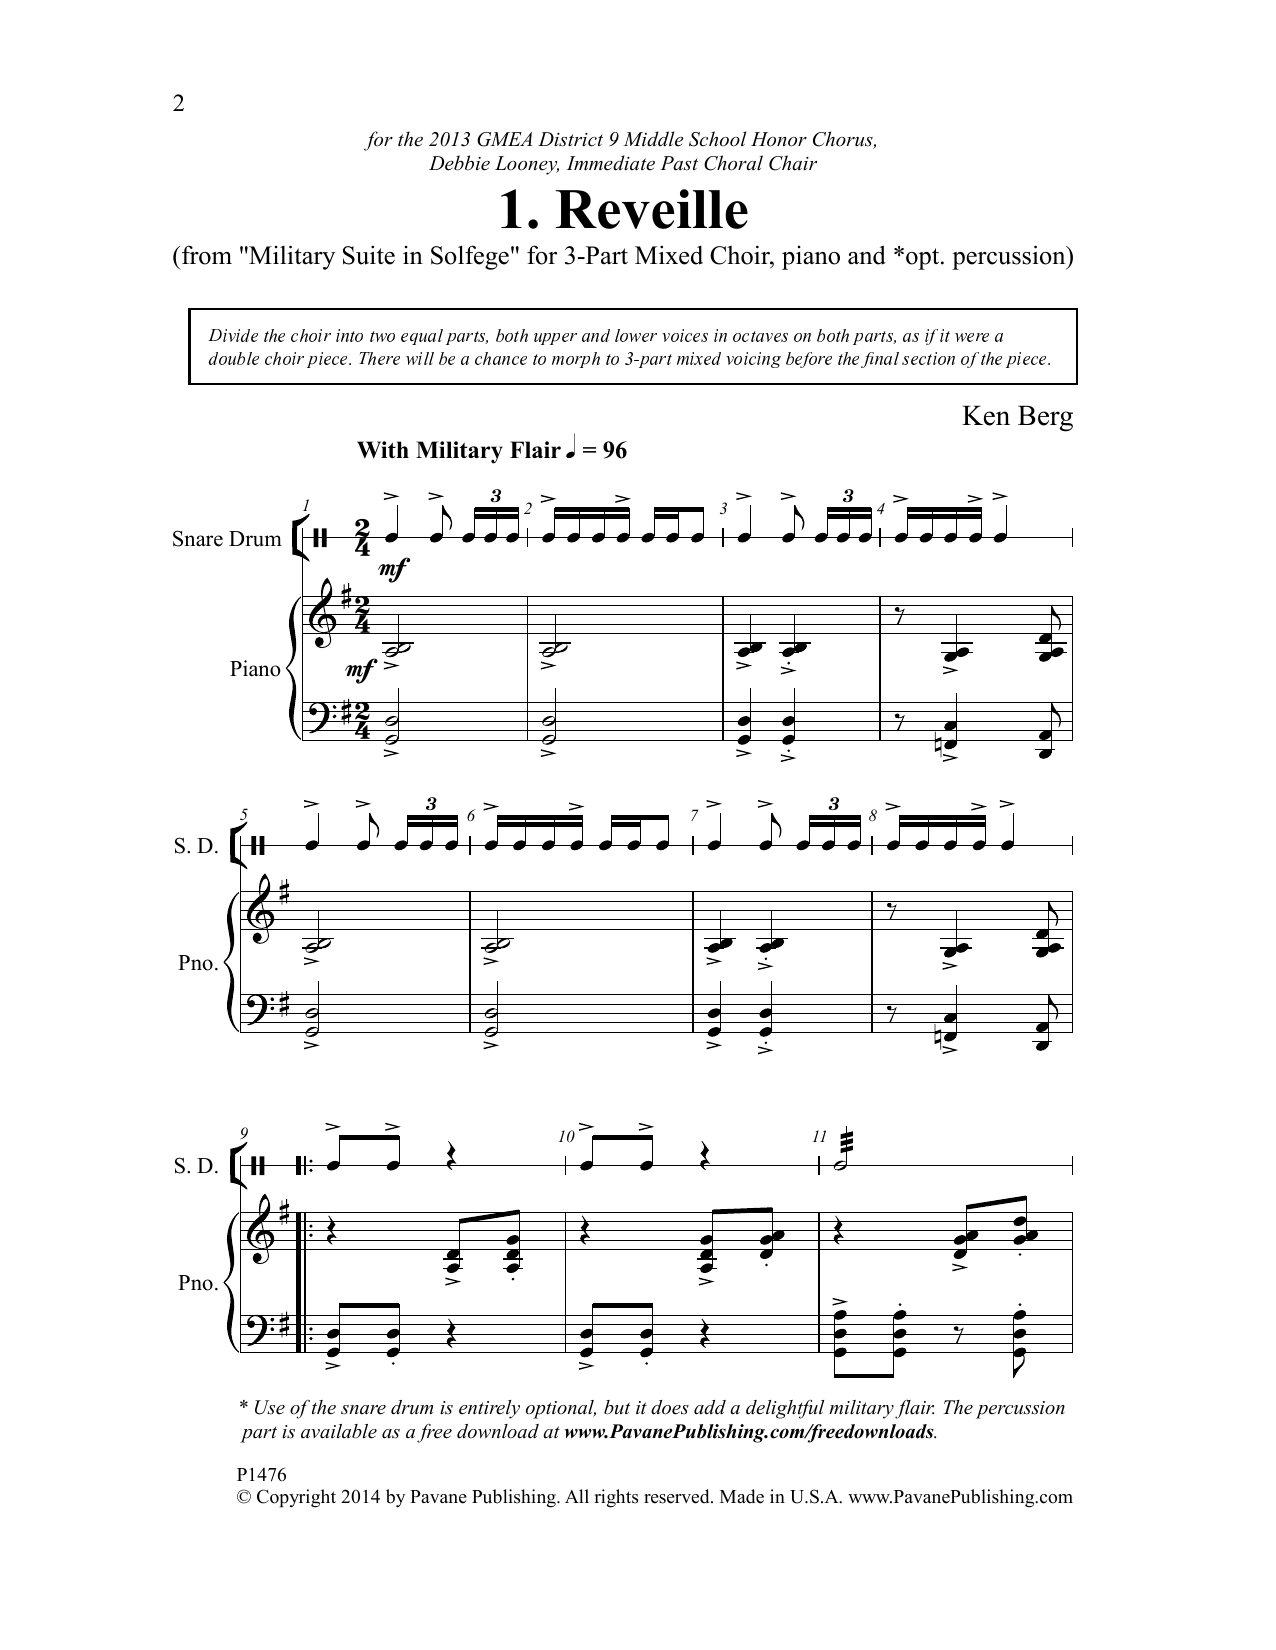 Ken Berg Reveille Sheet Music Notes & Chords for Choral - Download or Print PDF